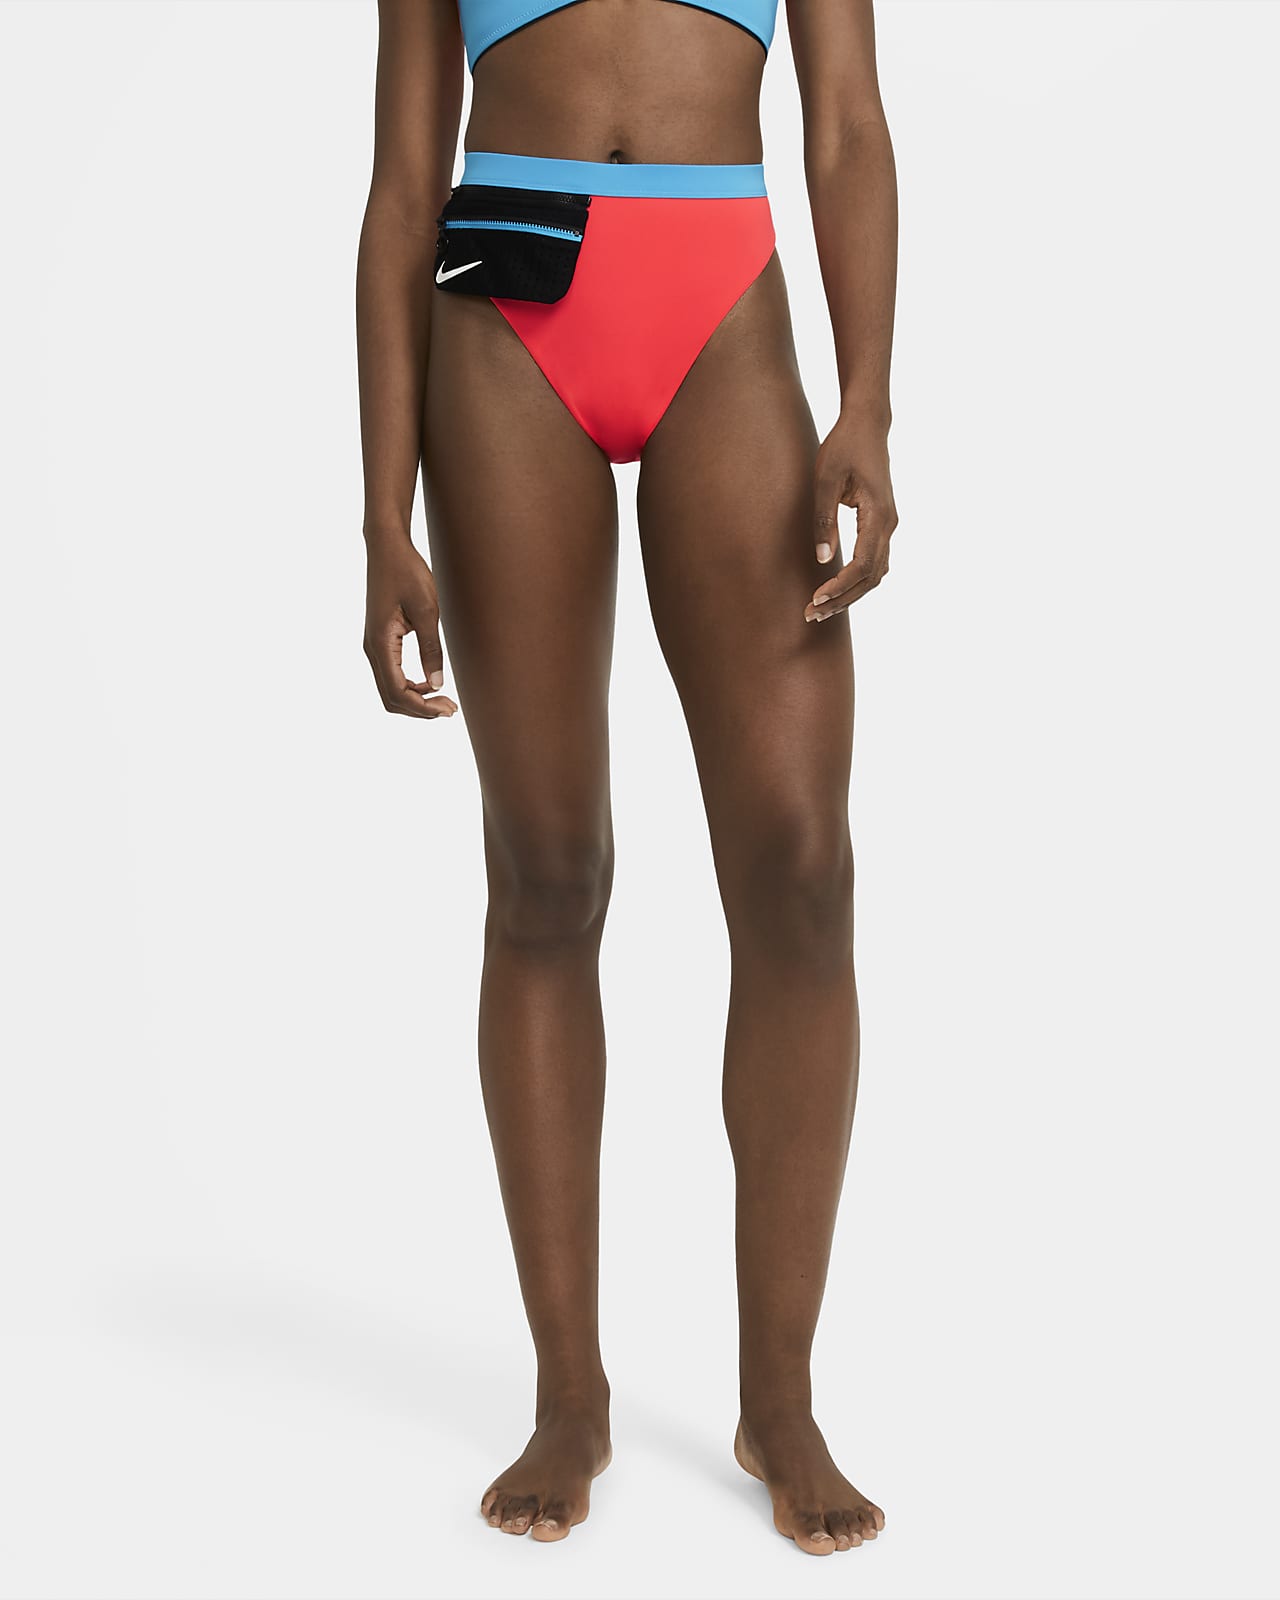 Nike Women's Color-Block High-Waist Swim Bottom